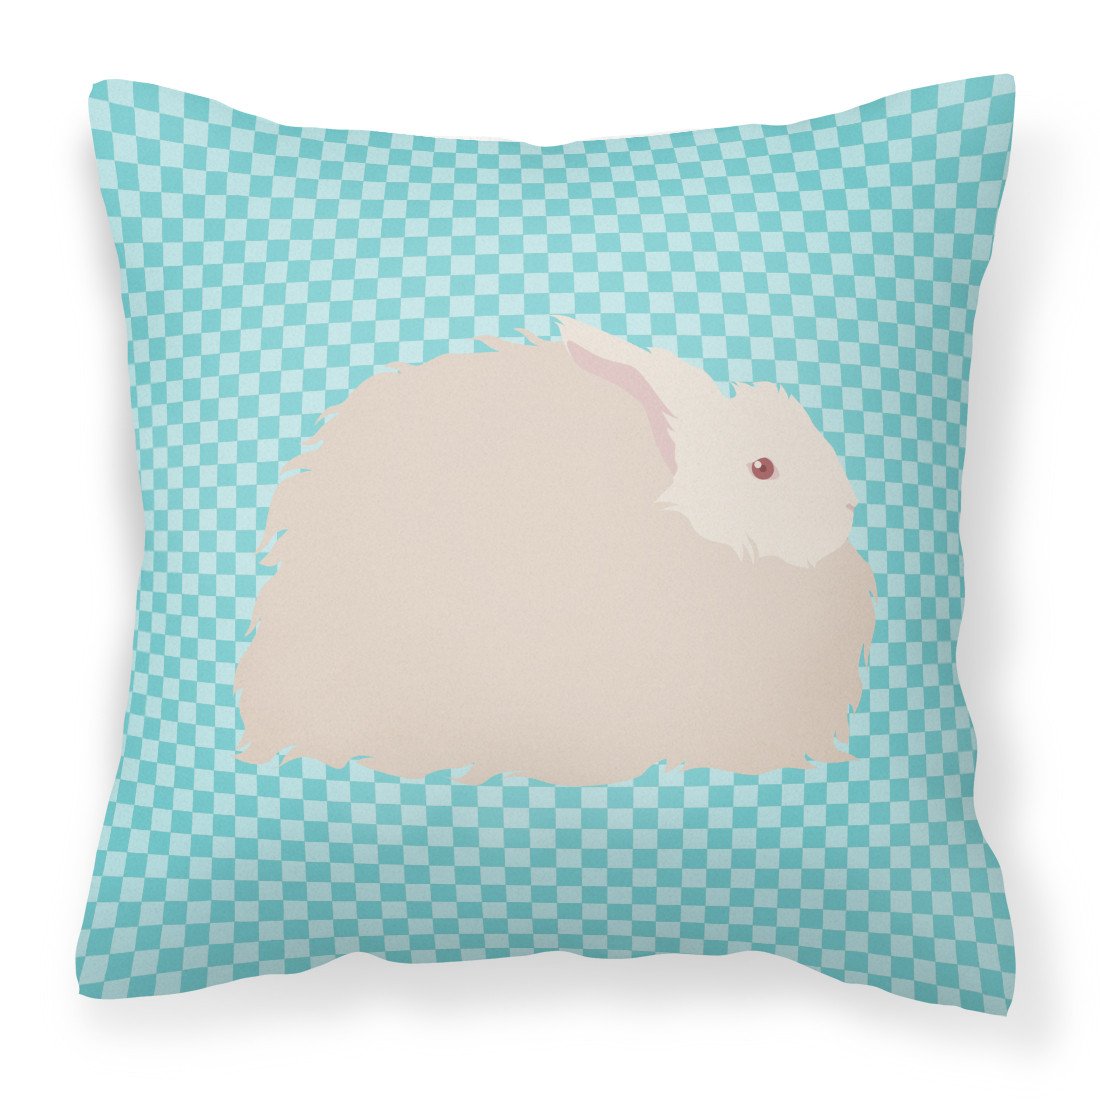 Fluffy Angora Rabbit Blue Check Fabric Decorative Pillow BB8133PW1818 by Caroline's Treasures